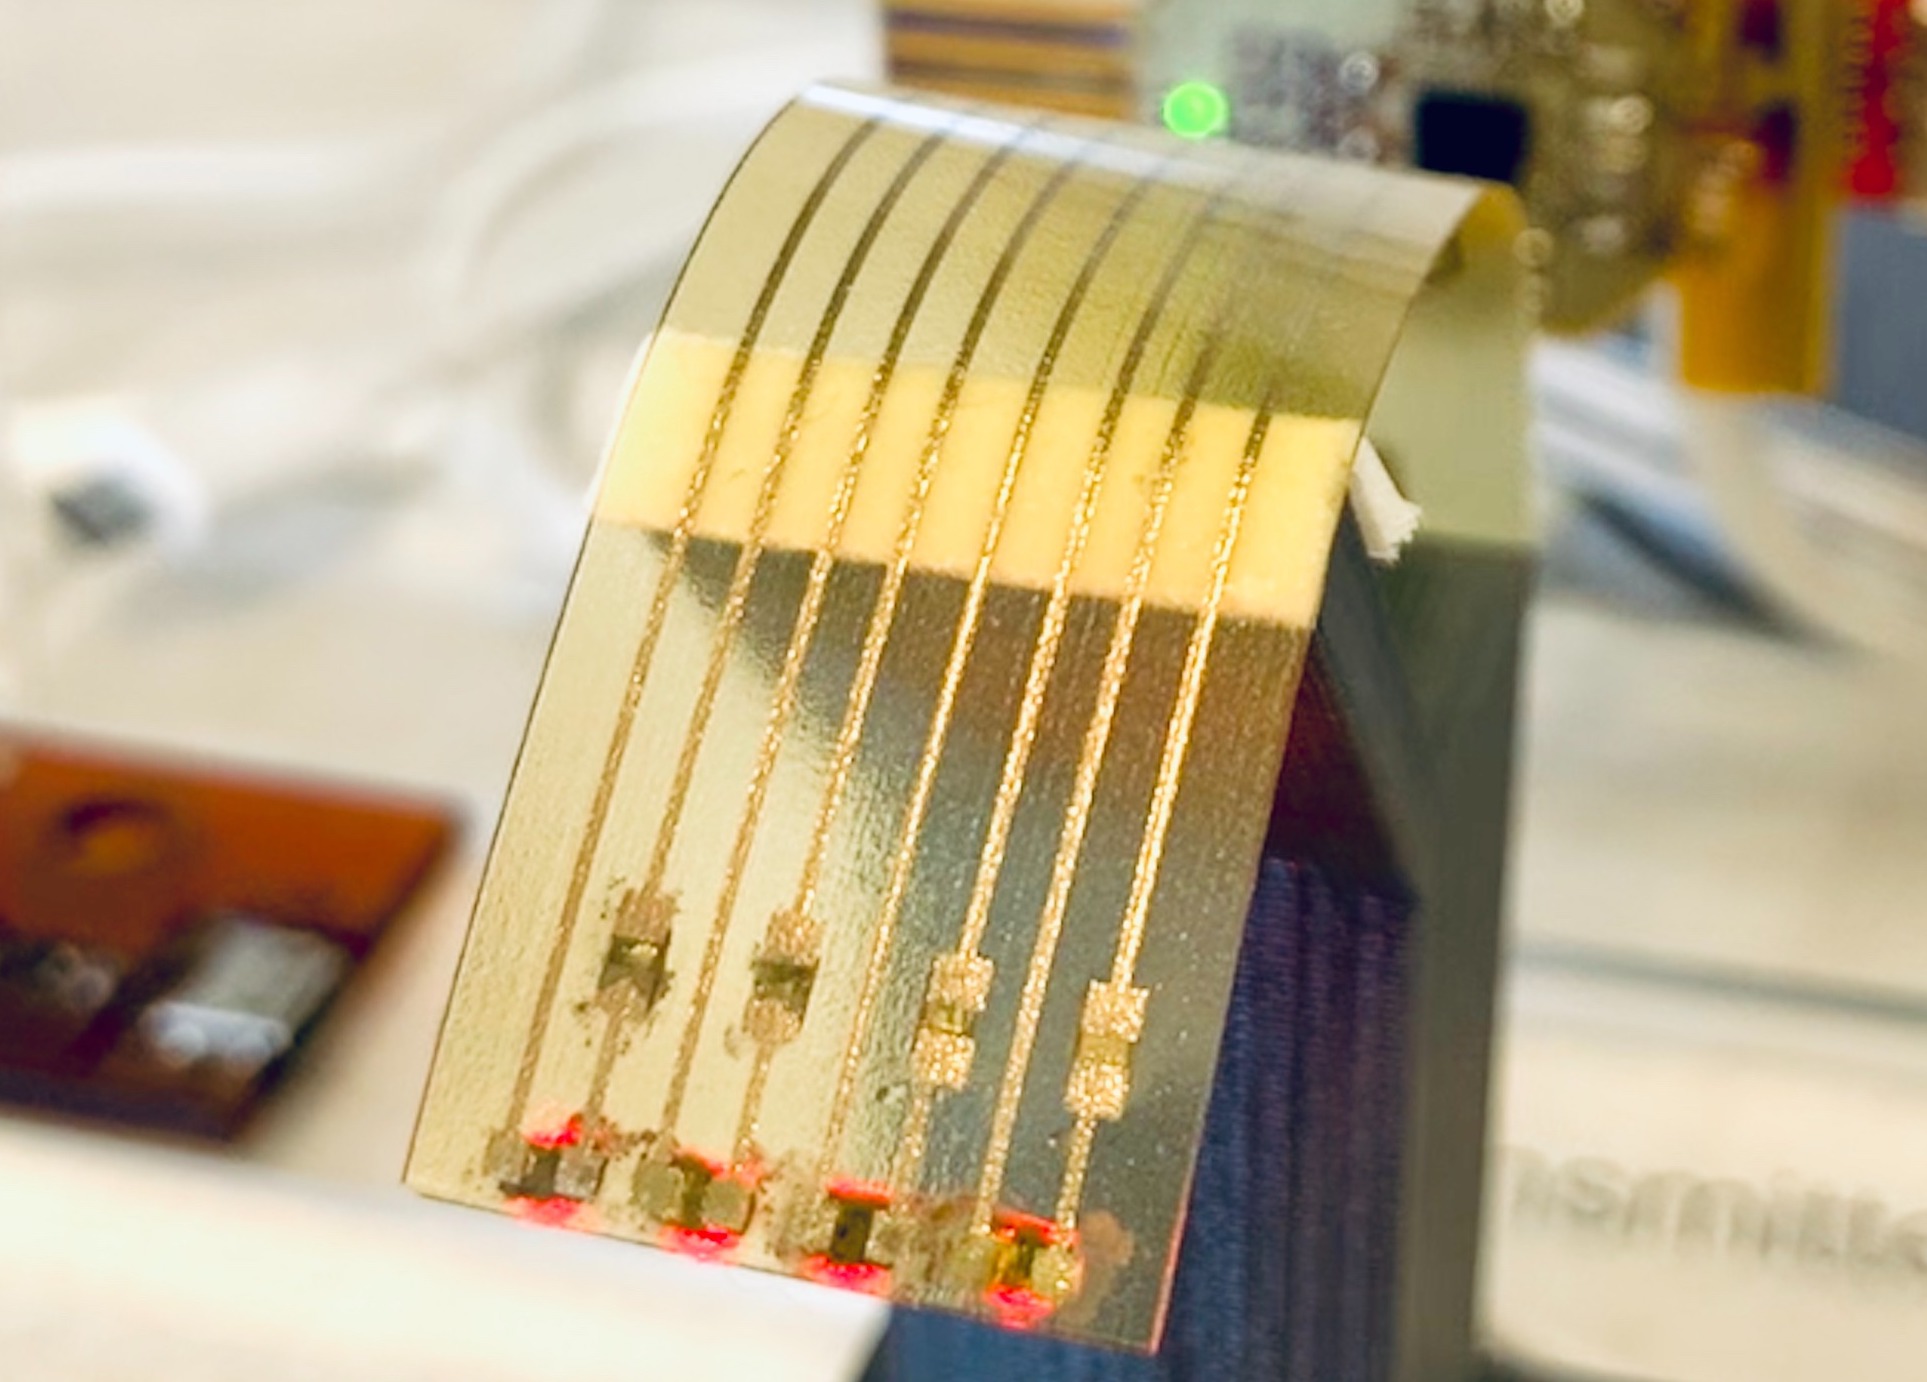 Nano Dimension凭借其AME技术取得了重大进展，去年与瑞好(REHAU)合作创造了触控传感器的“里程碑”。照片通过纳米尺寸。